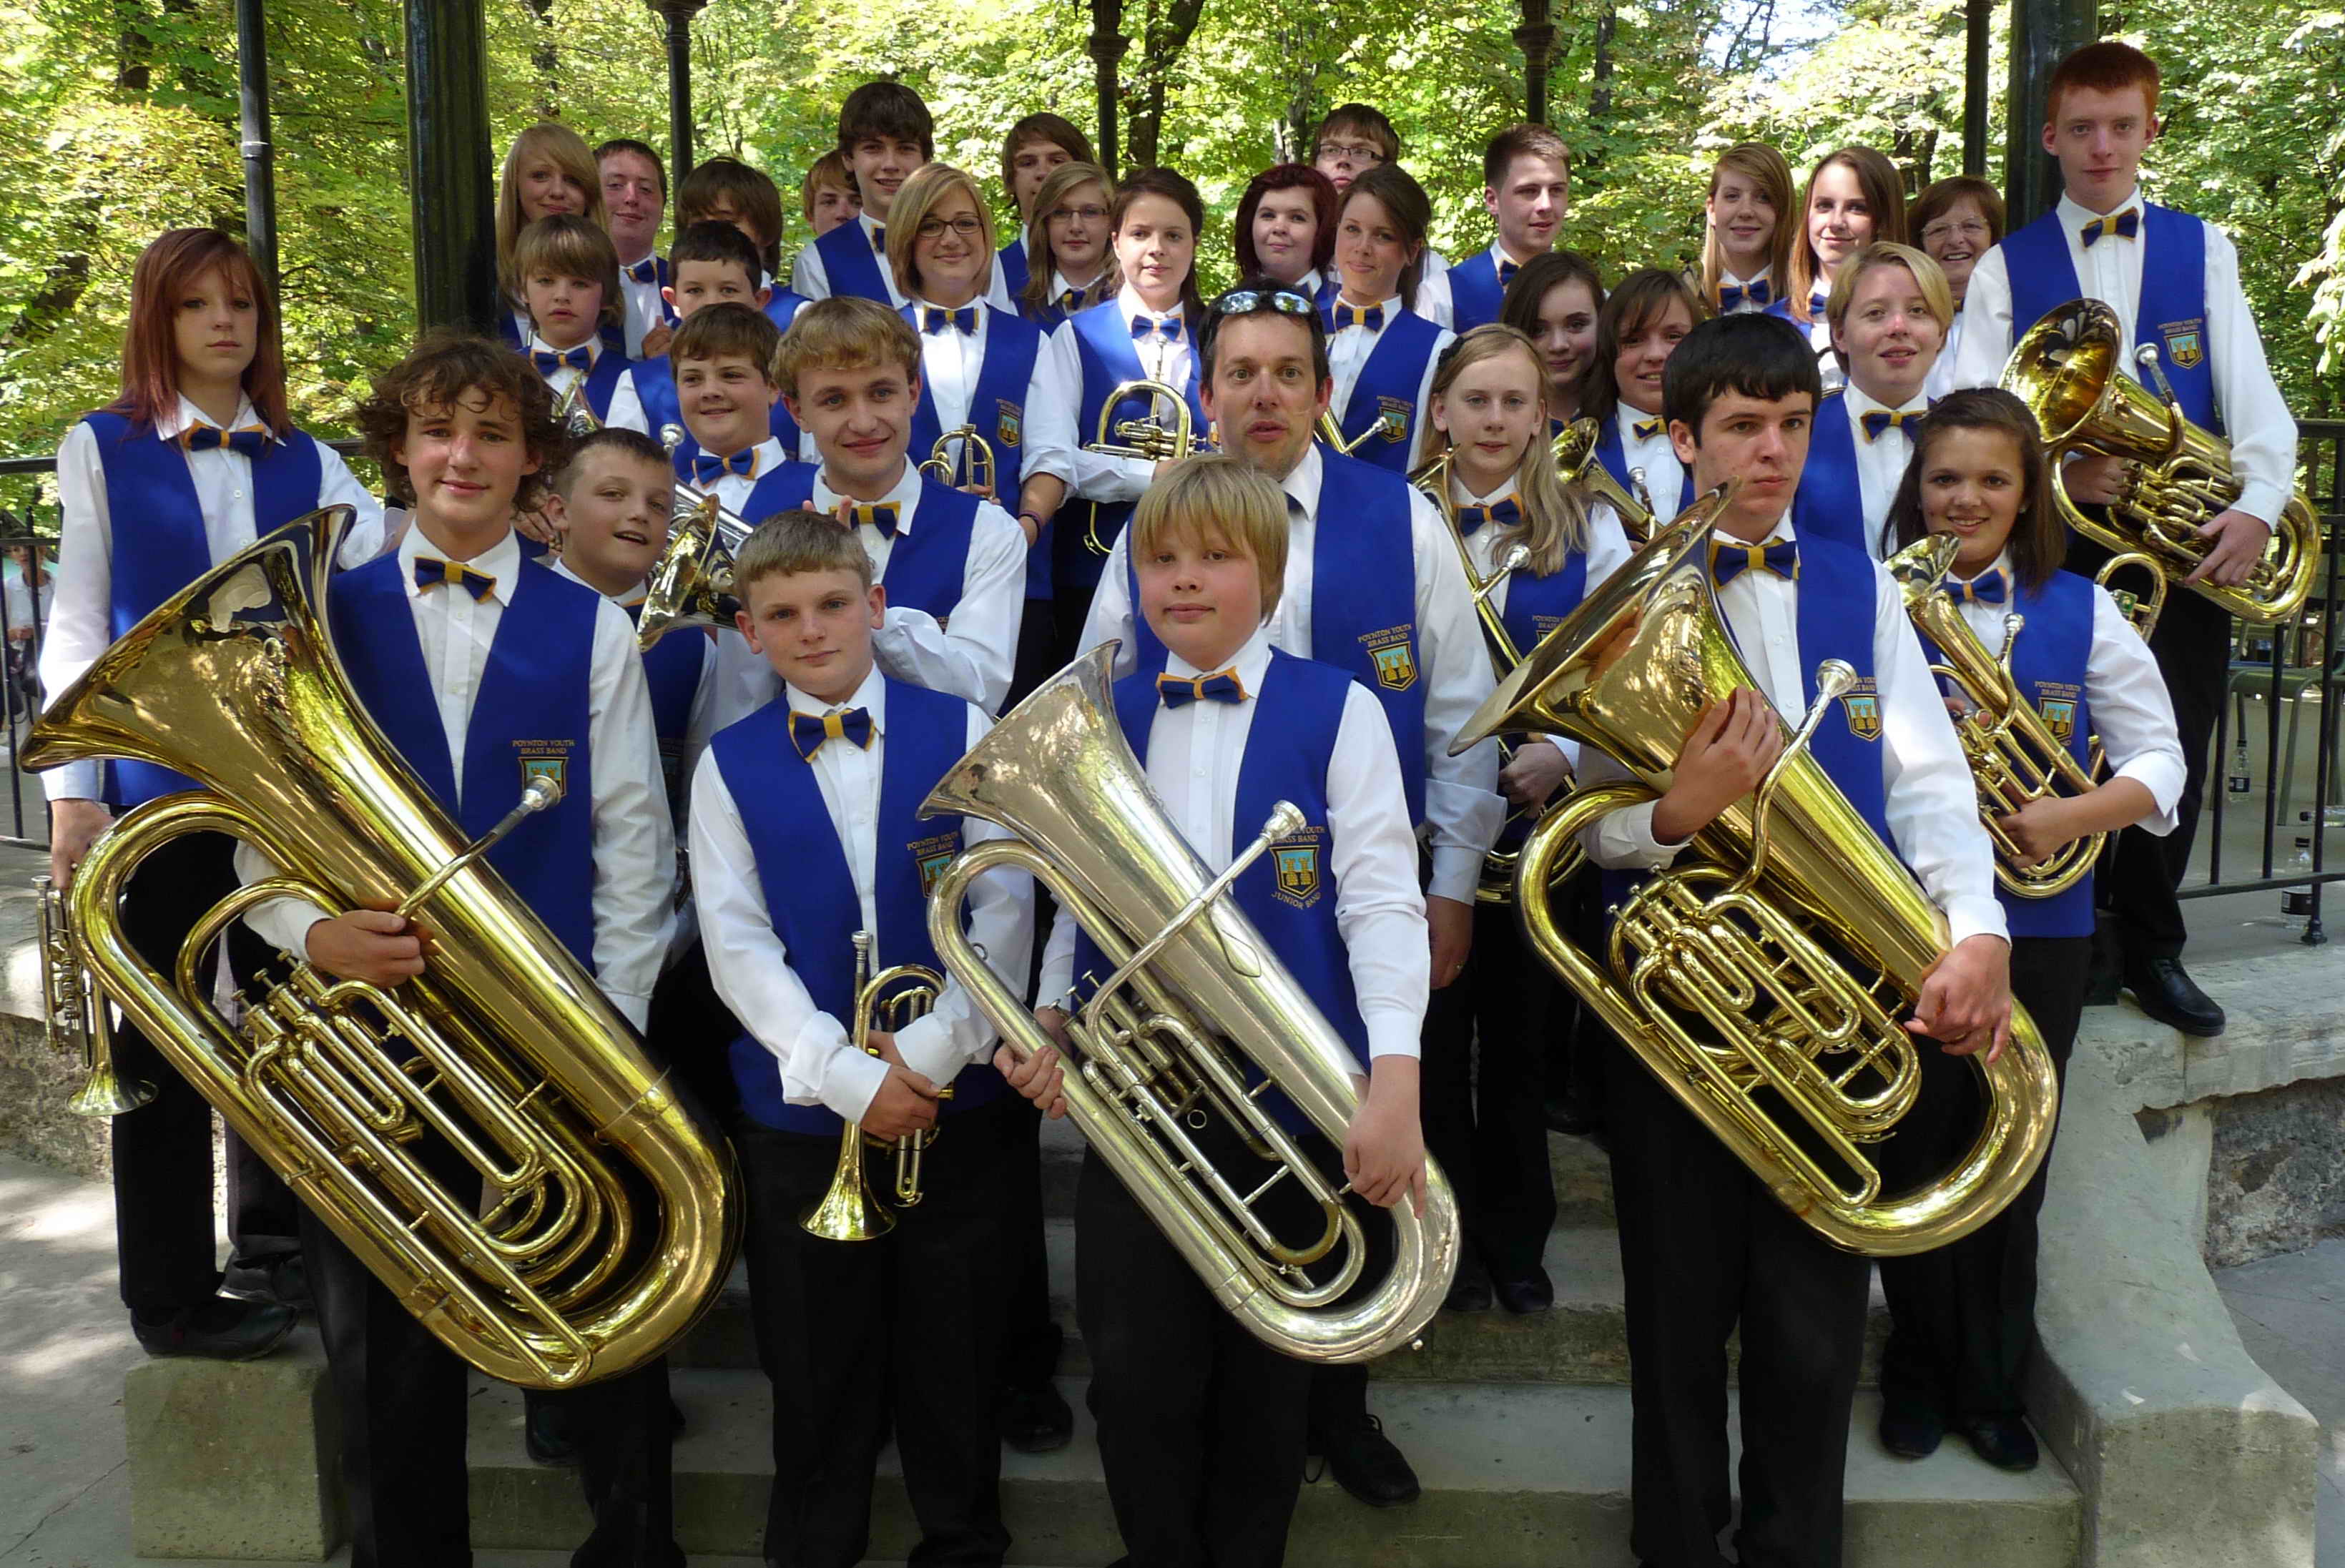 Poynton Youth Brass Band